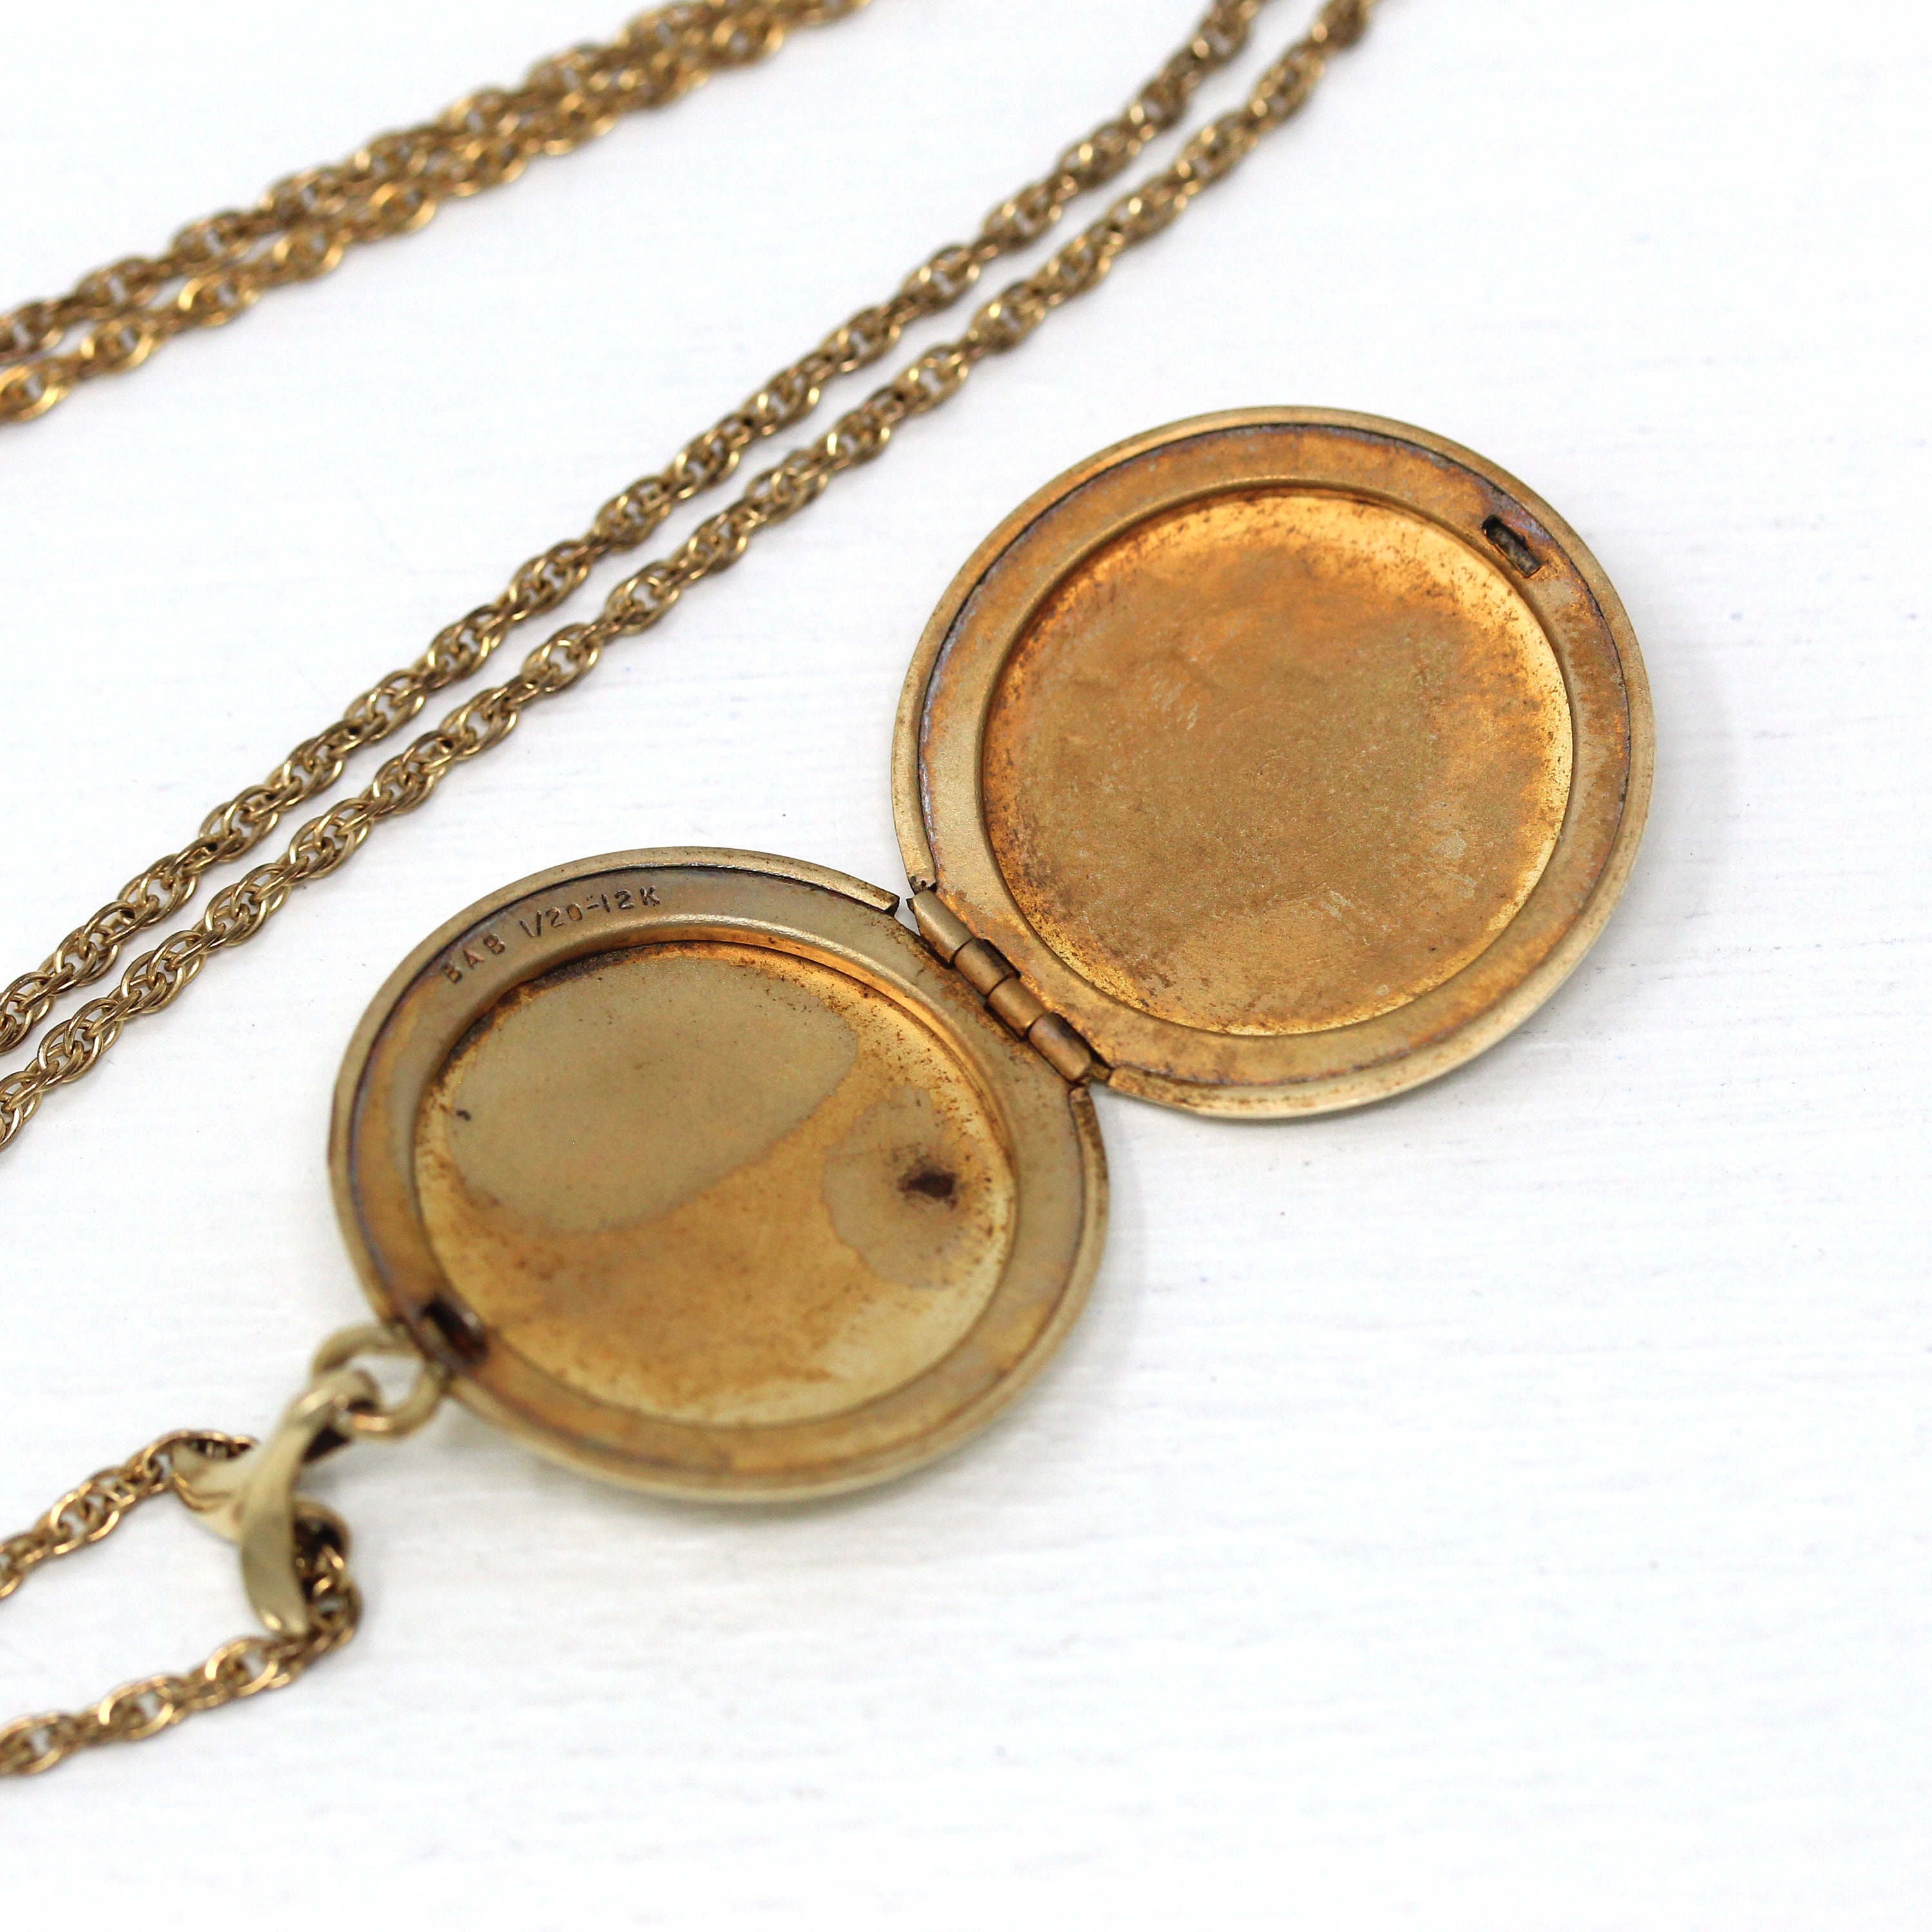 Vintage Flower Locket - Retro 12k Gold Filled Round Engraved Necklace Pendant - Circa 1960s Era Statement Keepsake Photo Ballou 60s Jewelry No Chain